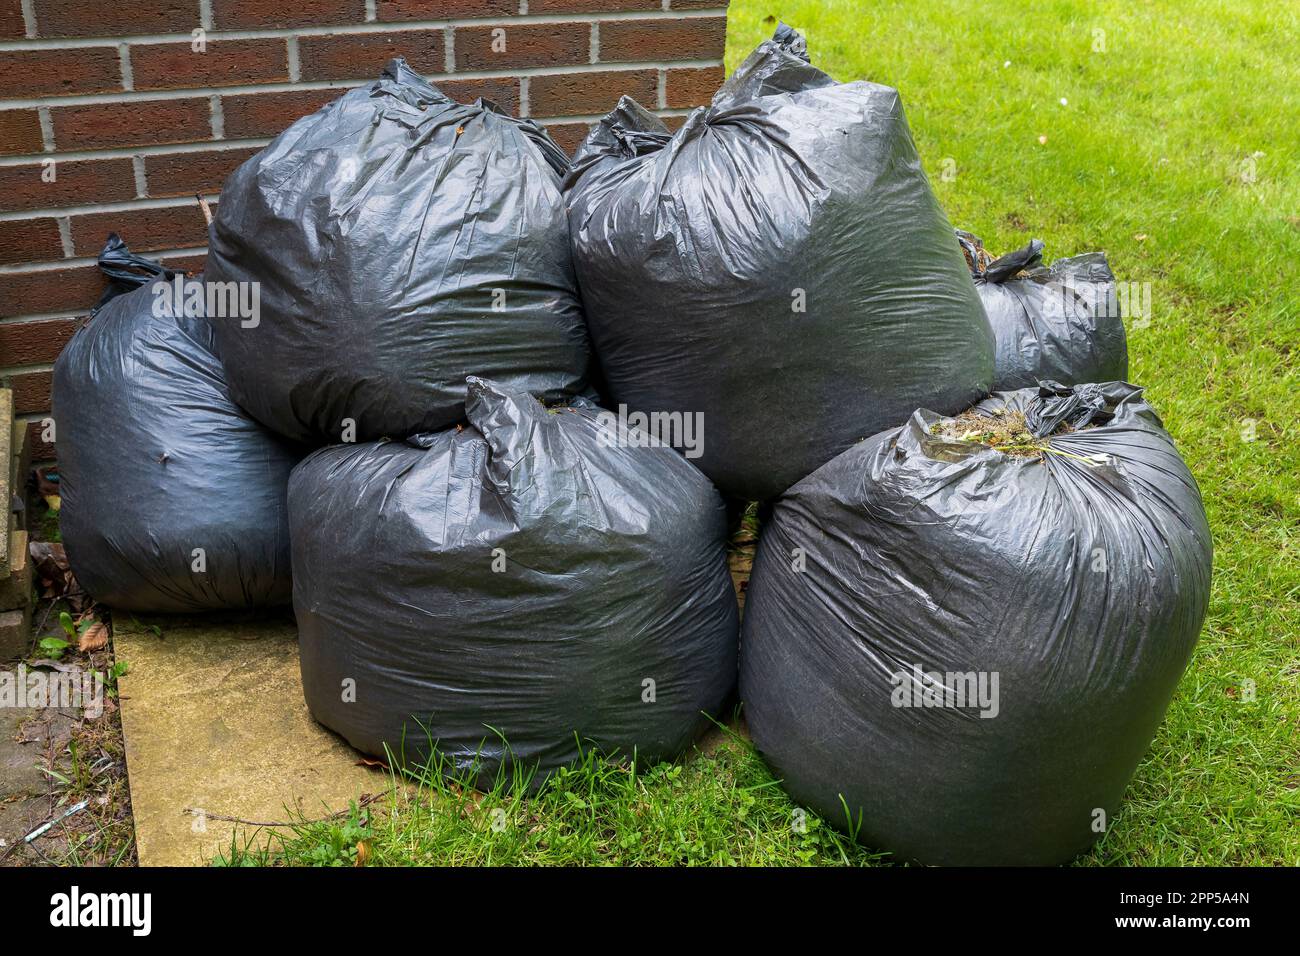 Black bin bags used for garden waste Stock Photo